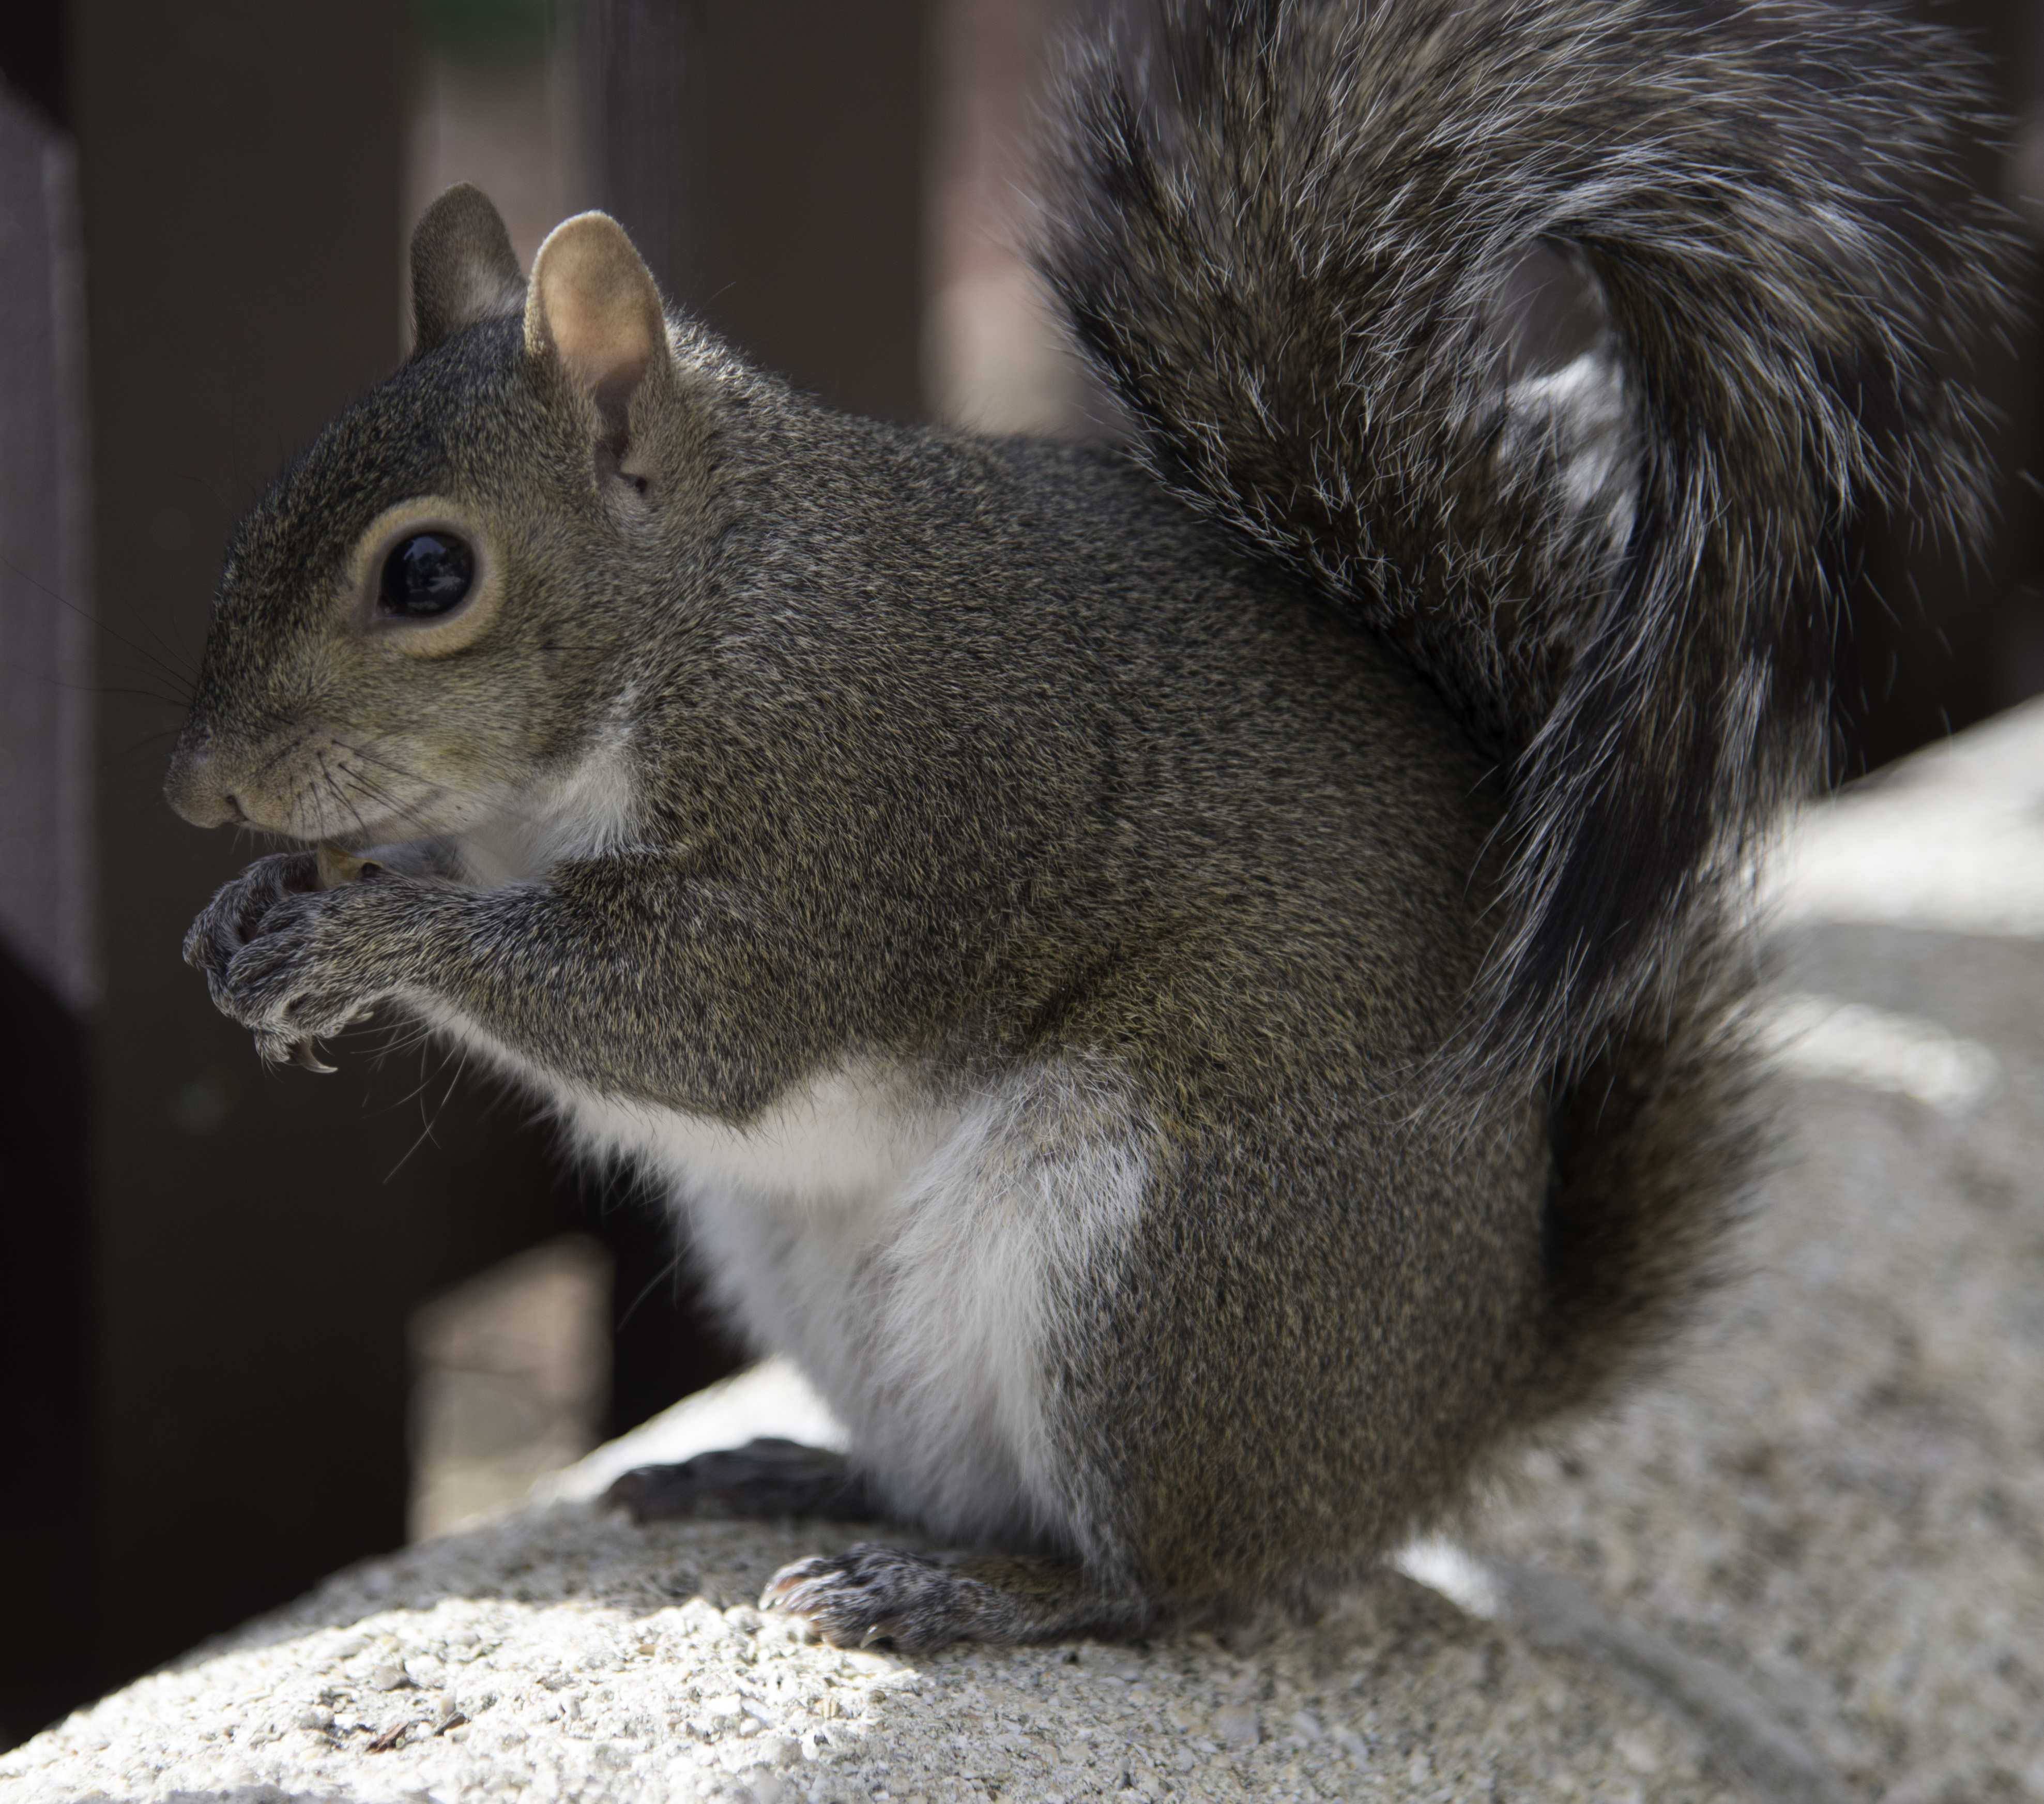 Squirrel eating Peanut image - Free stock photo - Public Domain ...